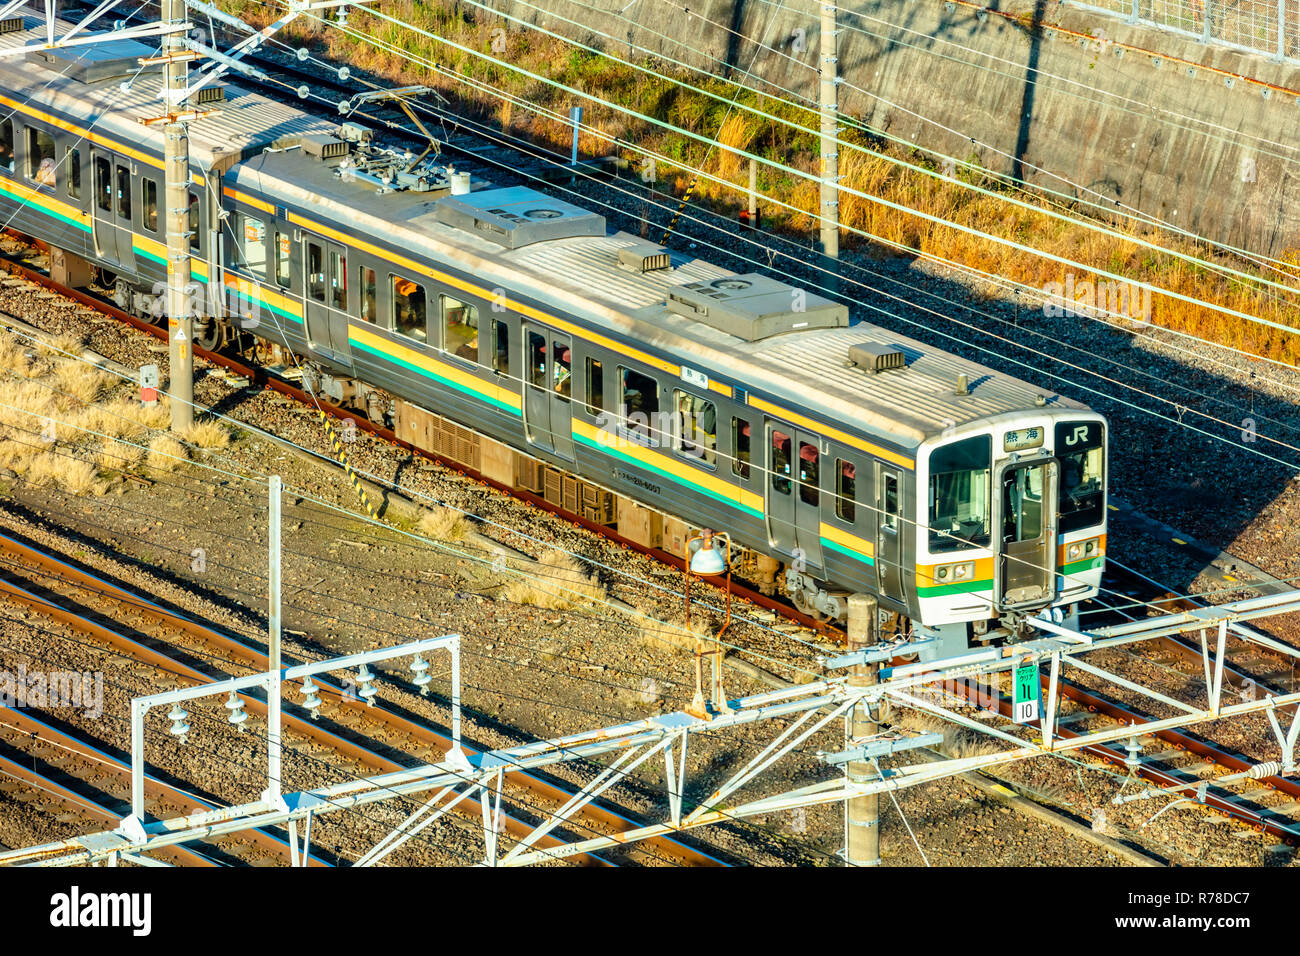 Mishima, Shizuoka / Japan - December 1 2018: Mishima city centre dense buildings featuring Mishima JR railway trains Stock Photo